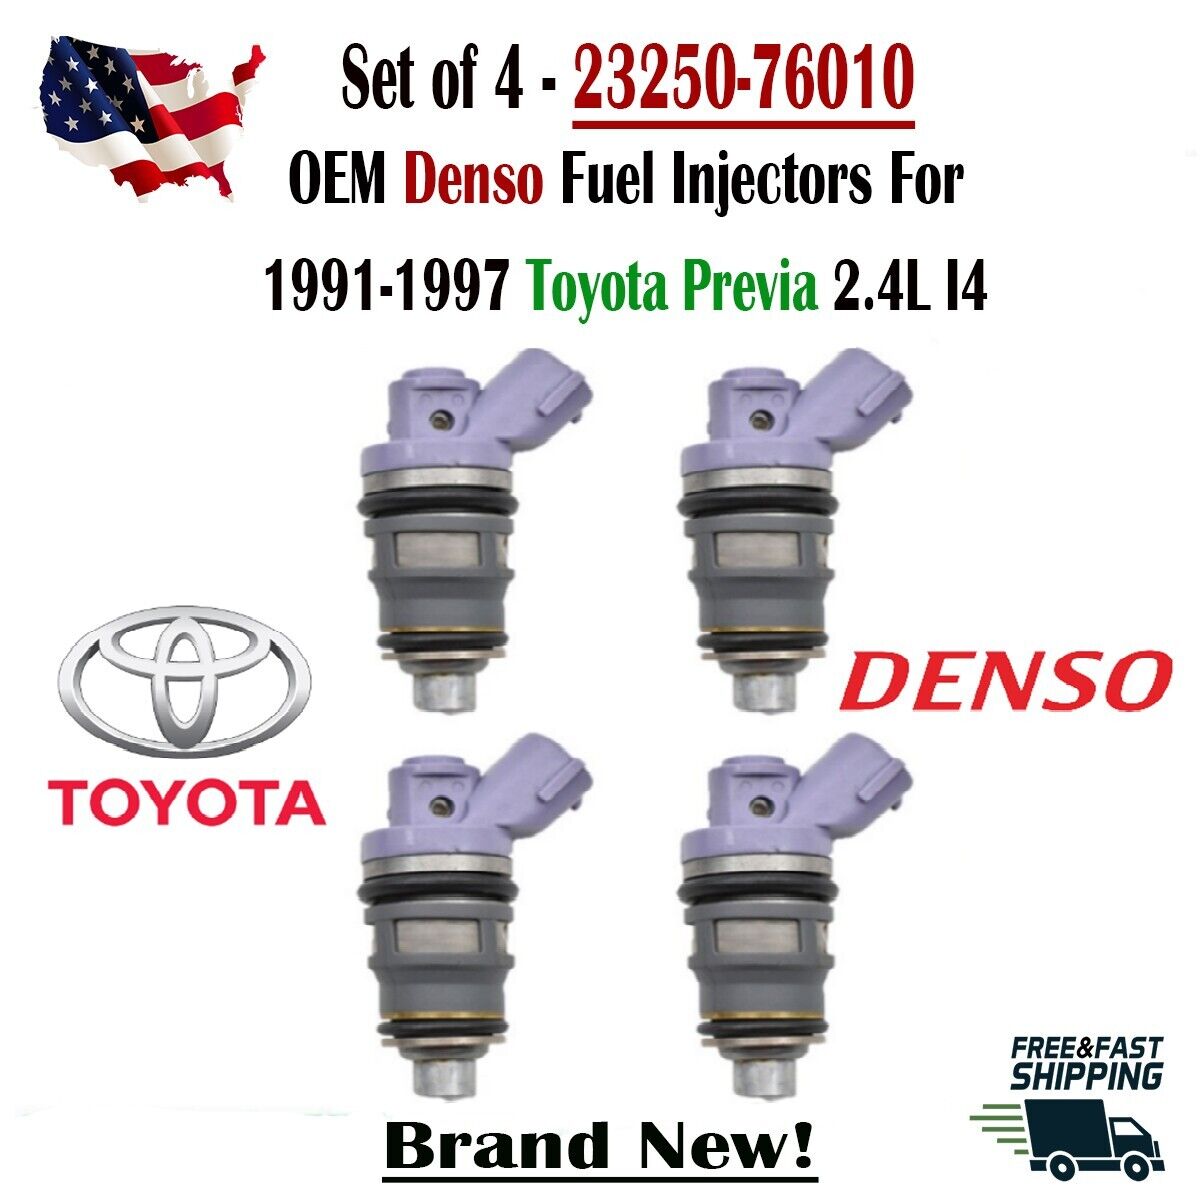 BRAND NEW Genuine Denso x4 Fuel Injectors for 1991-1997 Toyota Previa 2.4L I4